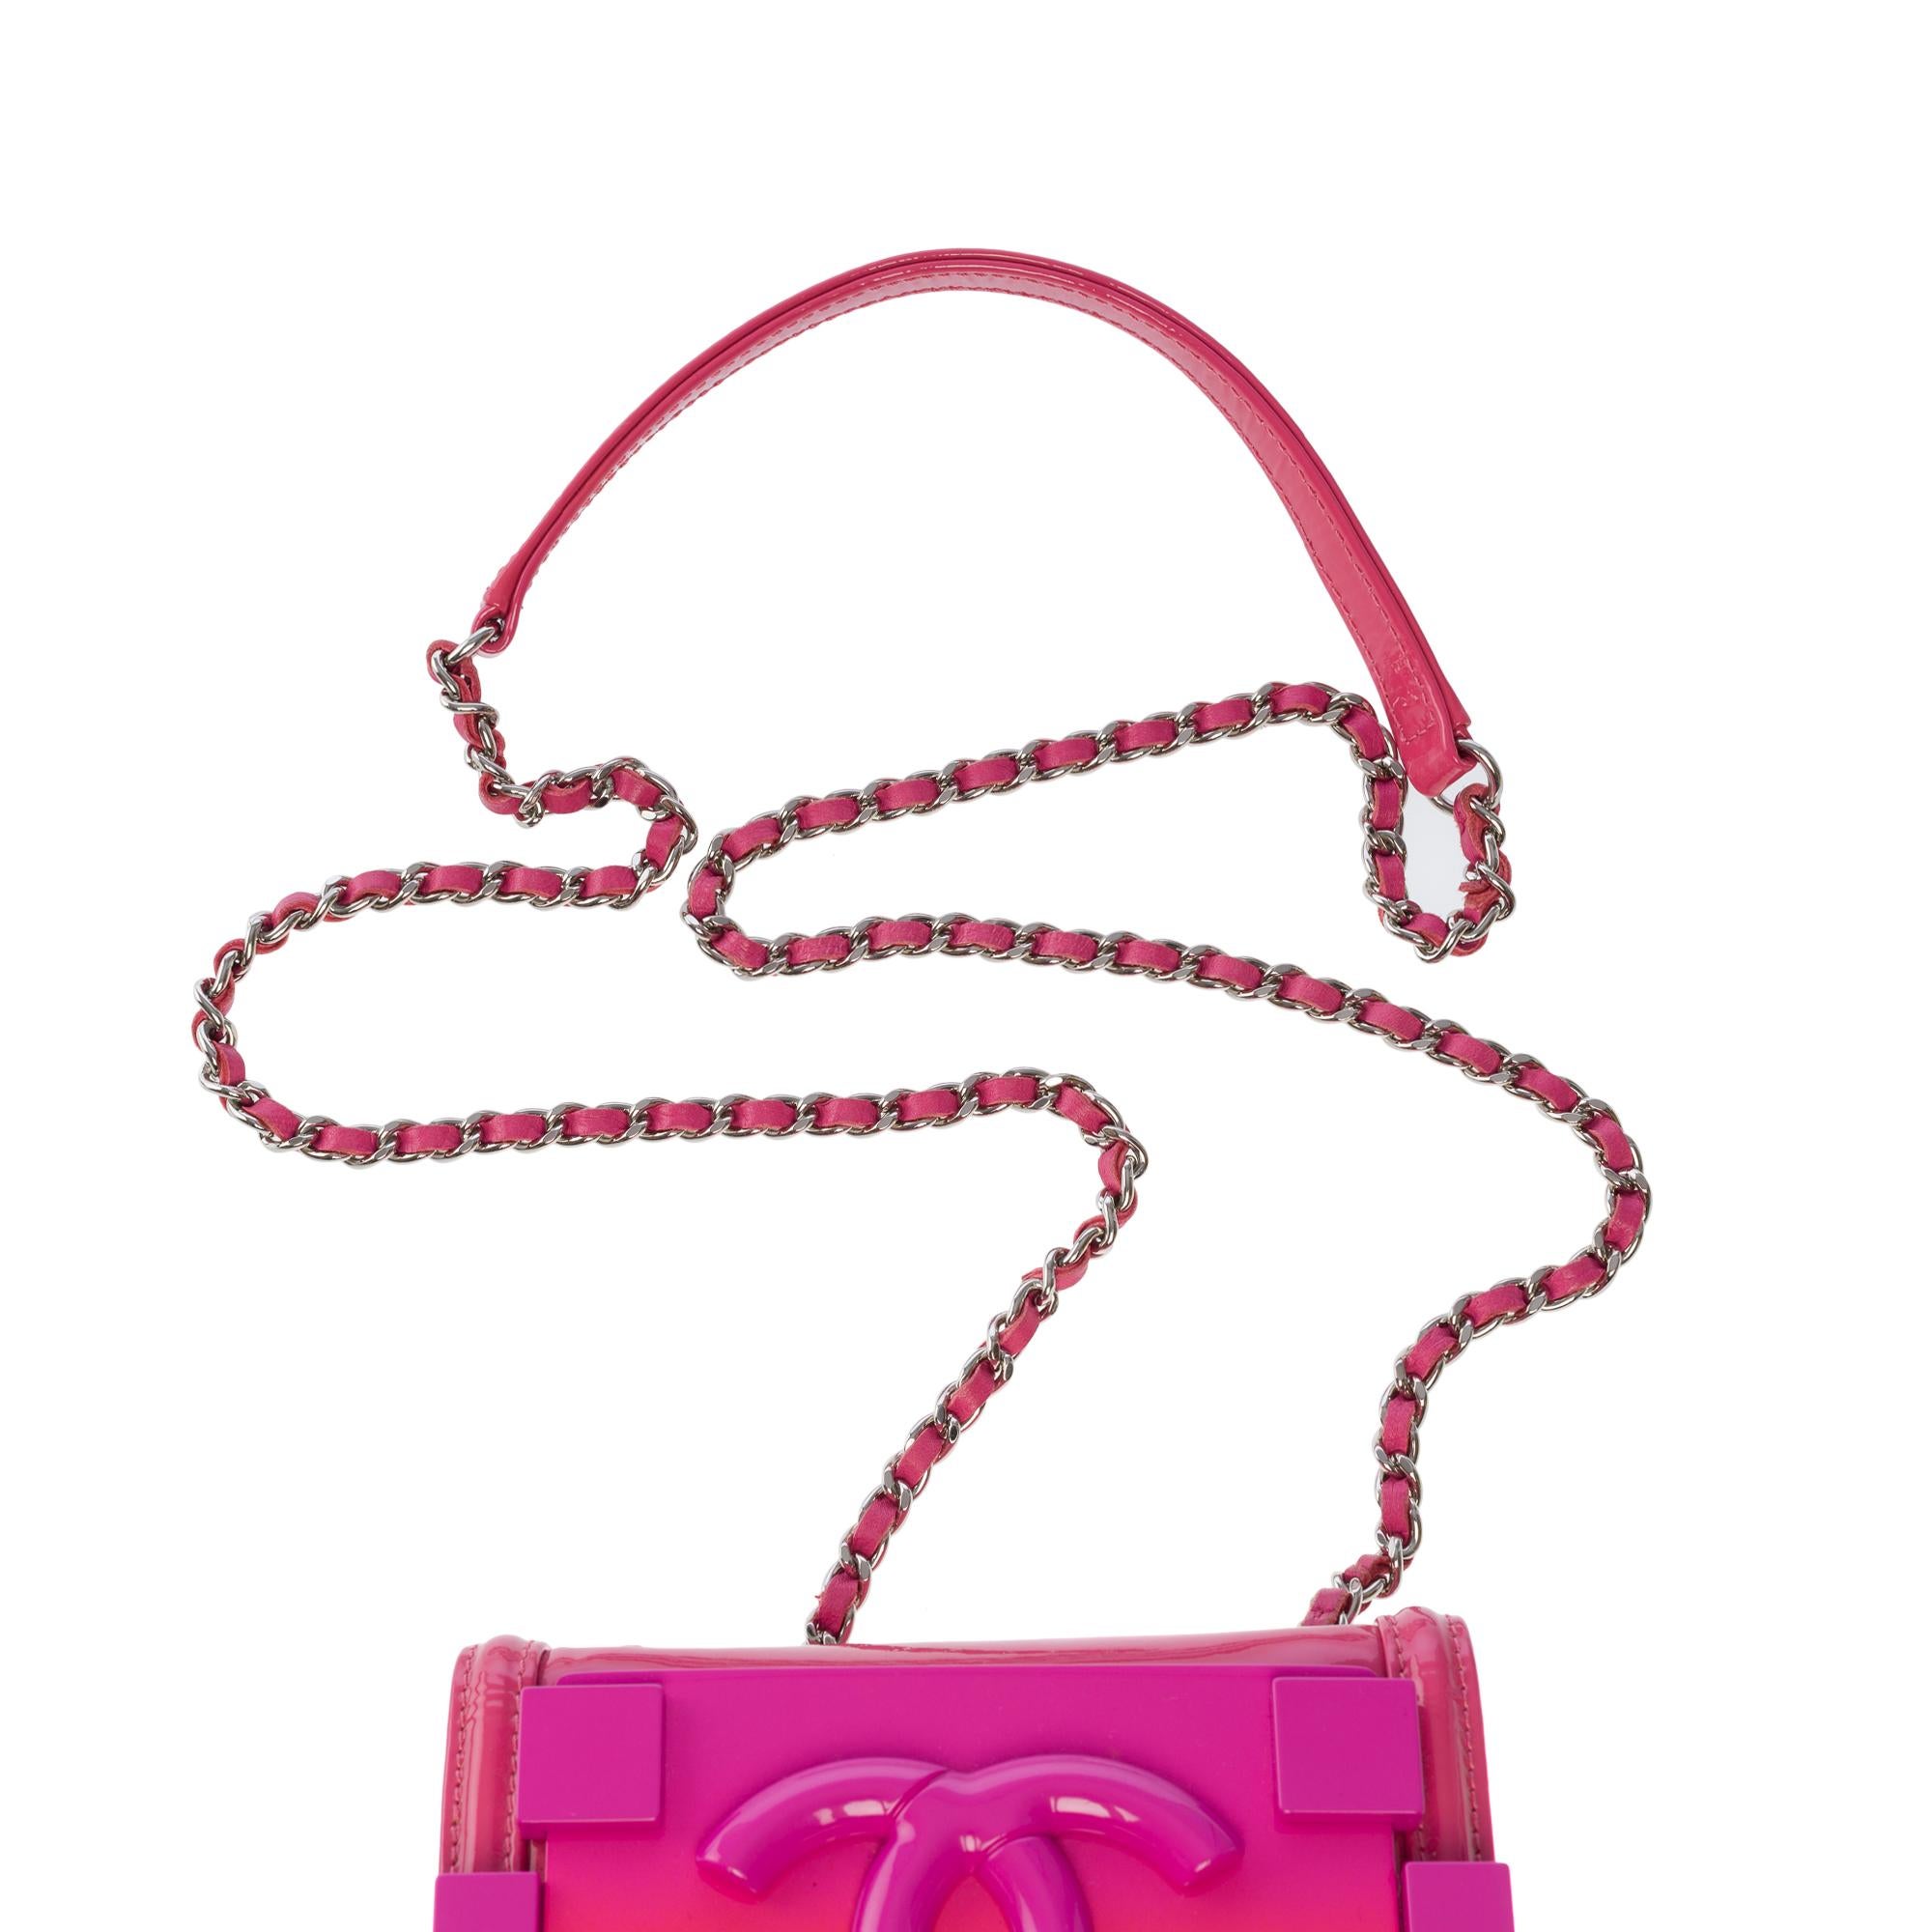 Limited edition Chanel Mini shoulder flap bag lego in Pink & Orange leather, SHW 1